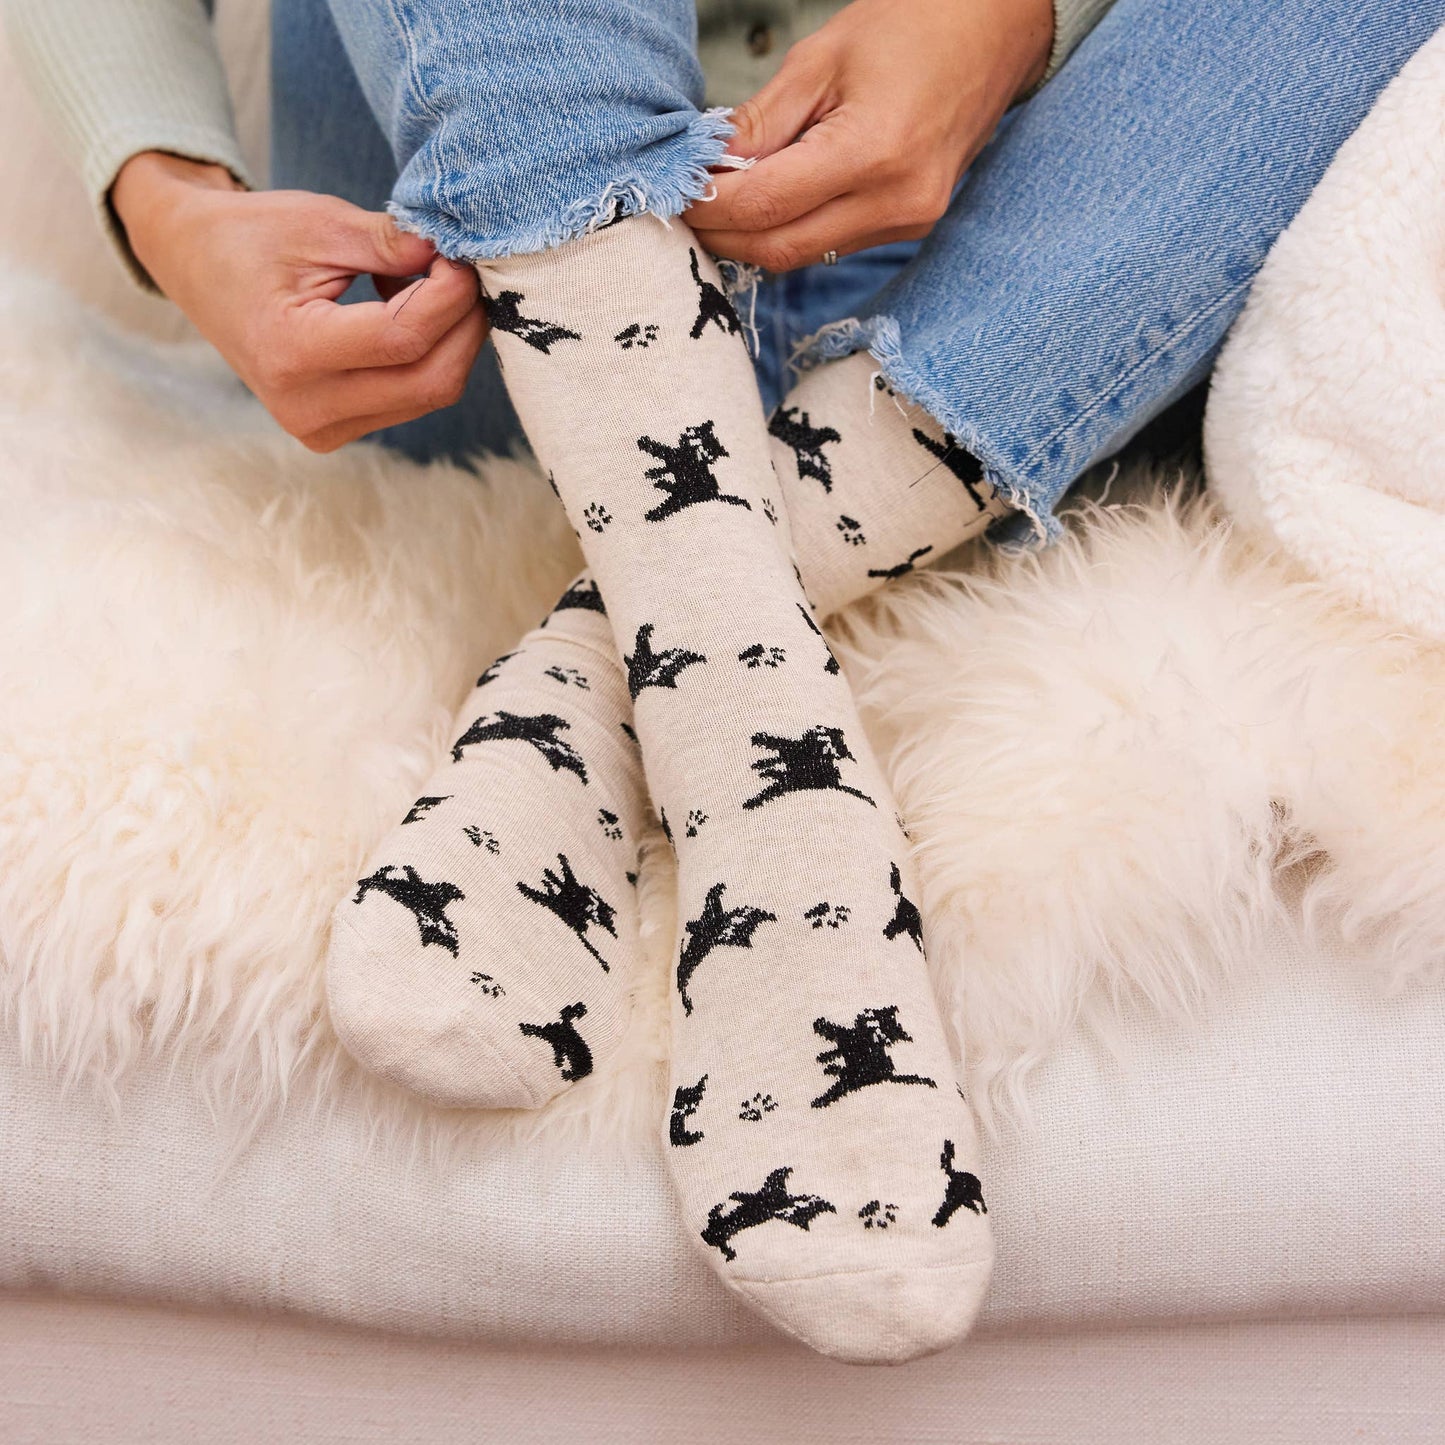 Socks that Save Cats (Beige Cats): Medium